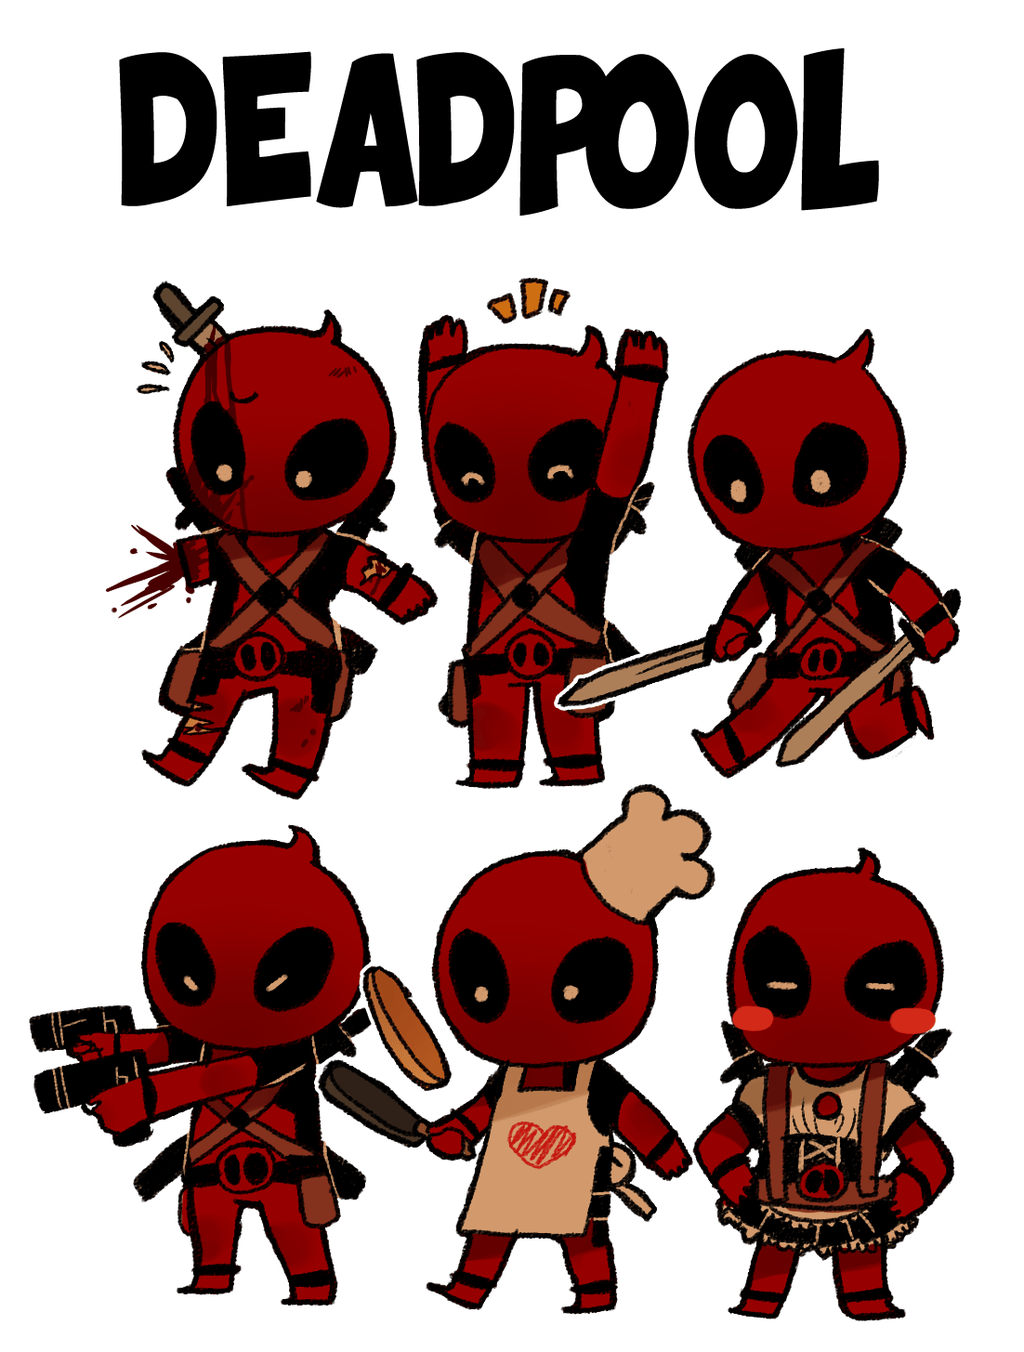 How to Draw Deadpool | Marvel Comics - YouTube